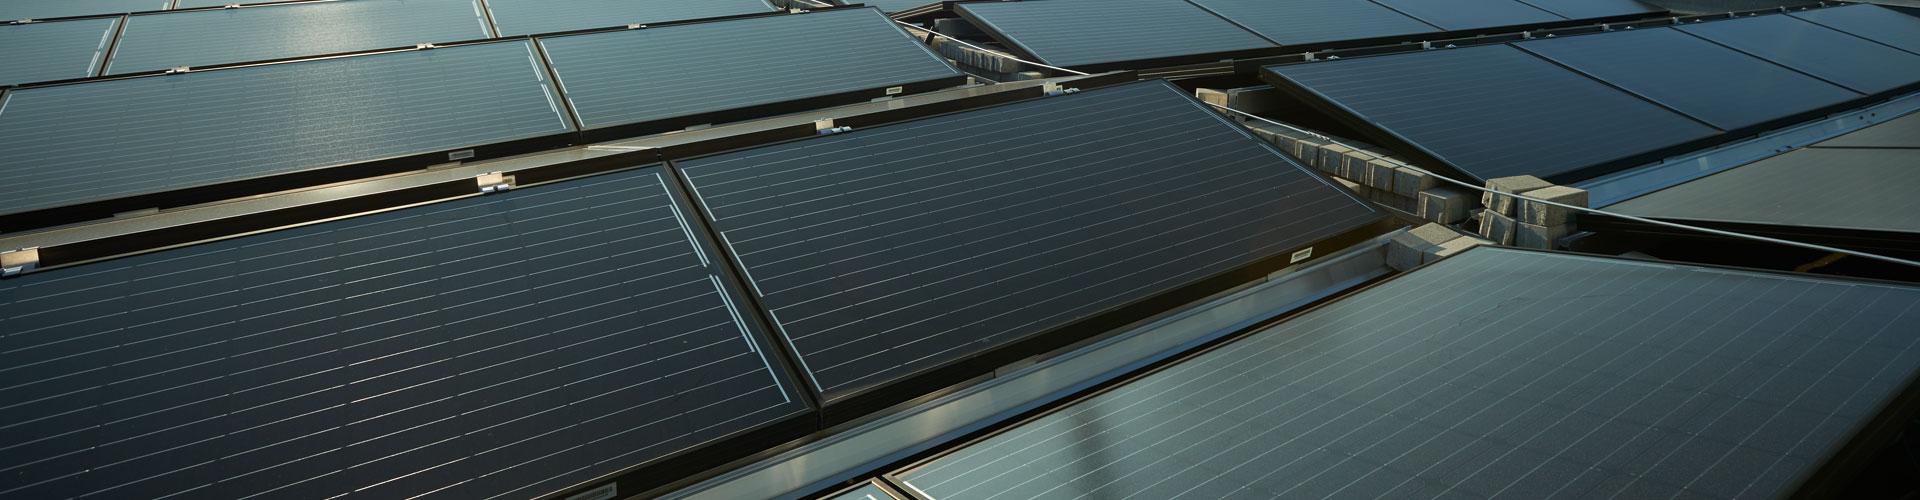 solarcomplex - Photovoltaik Dach